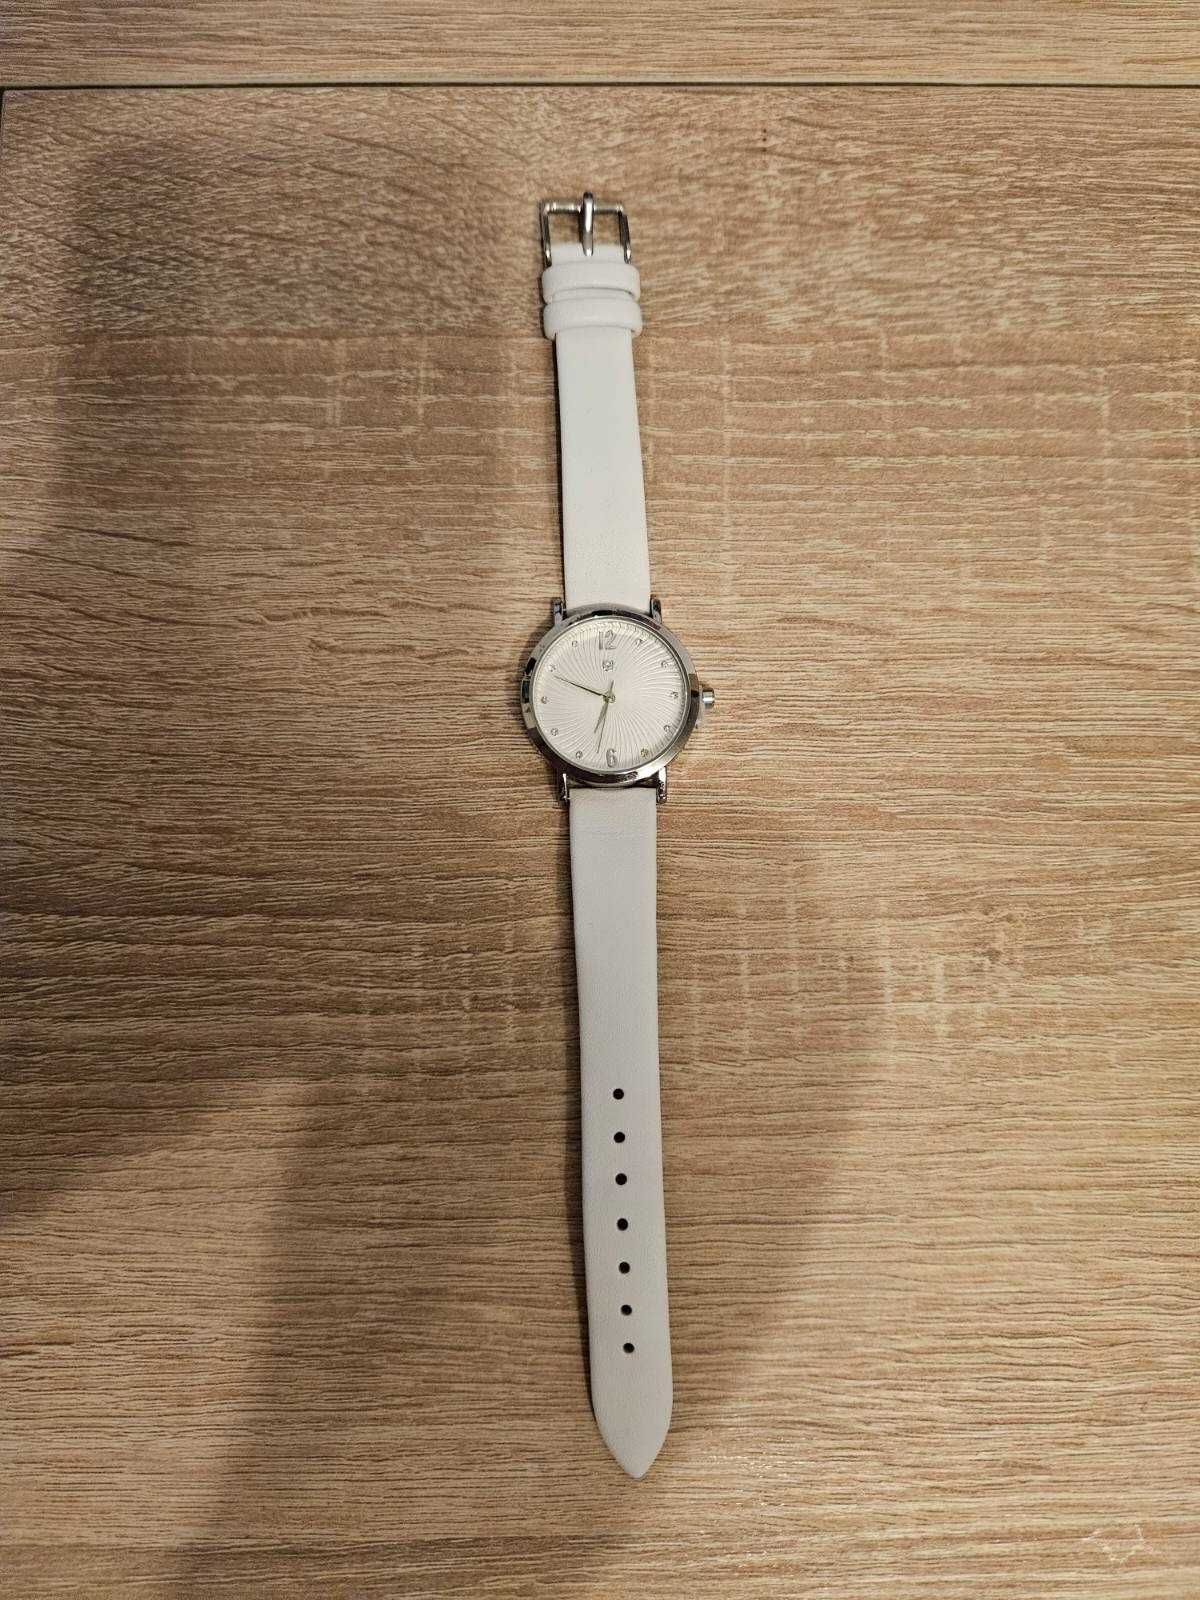 Zegarek dasmki analogowy